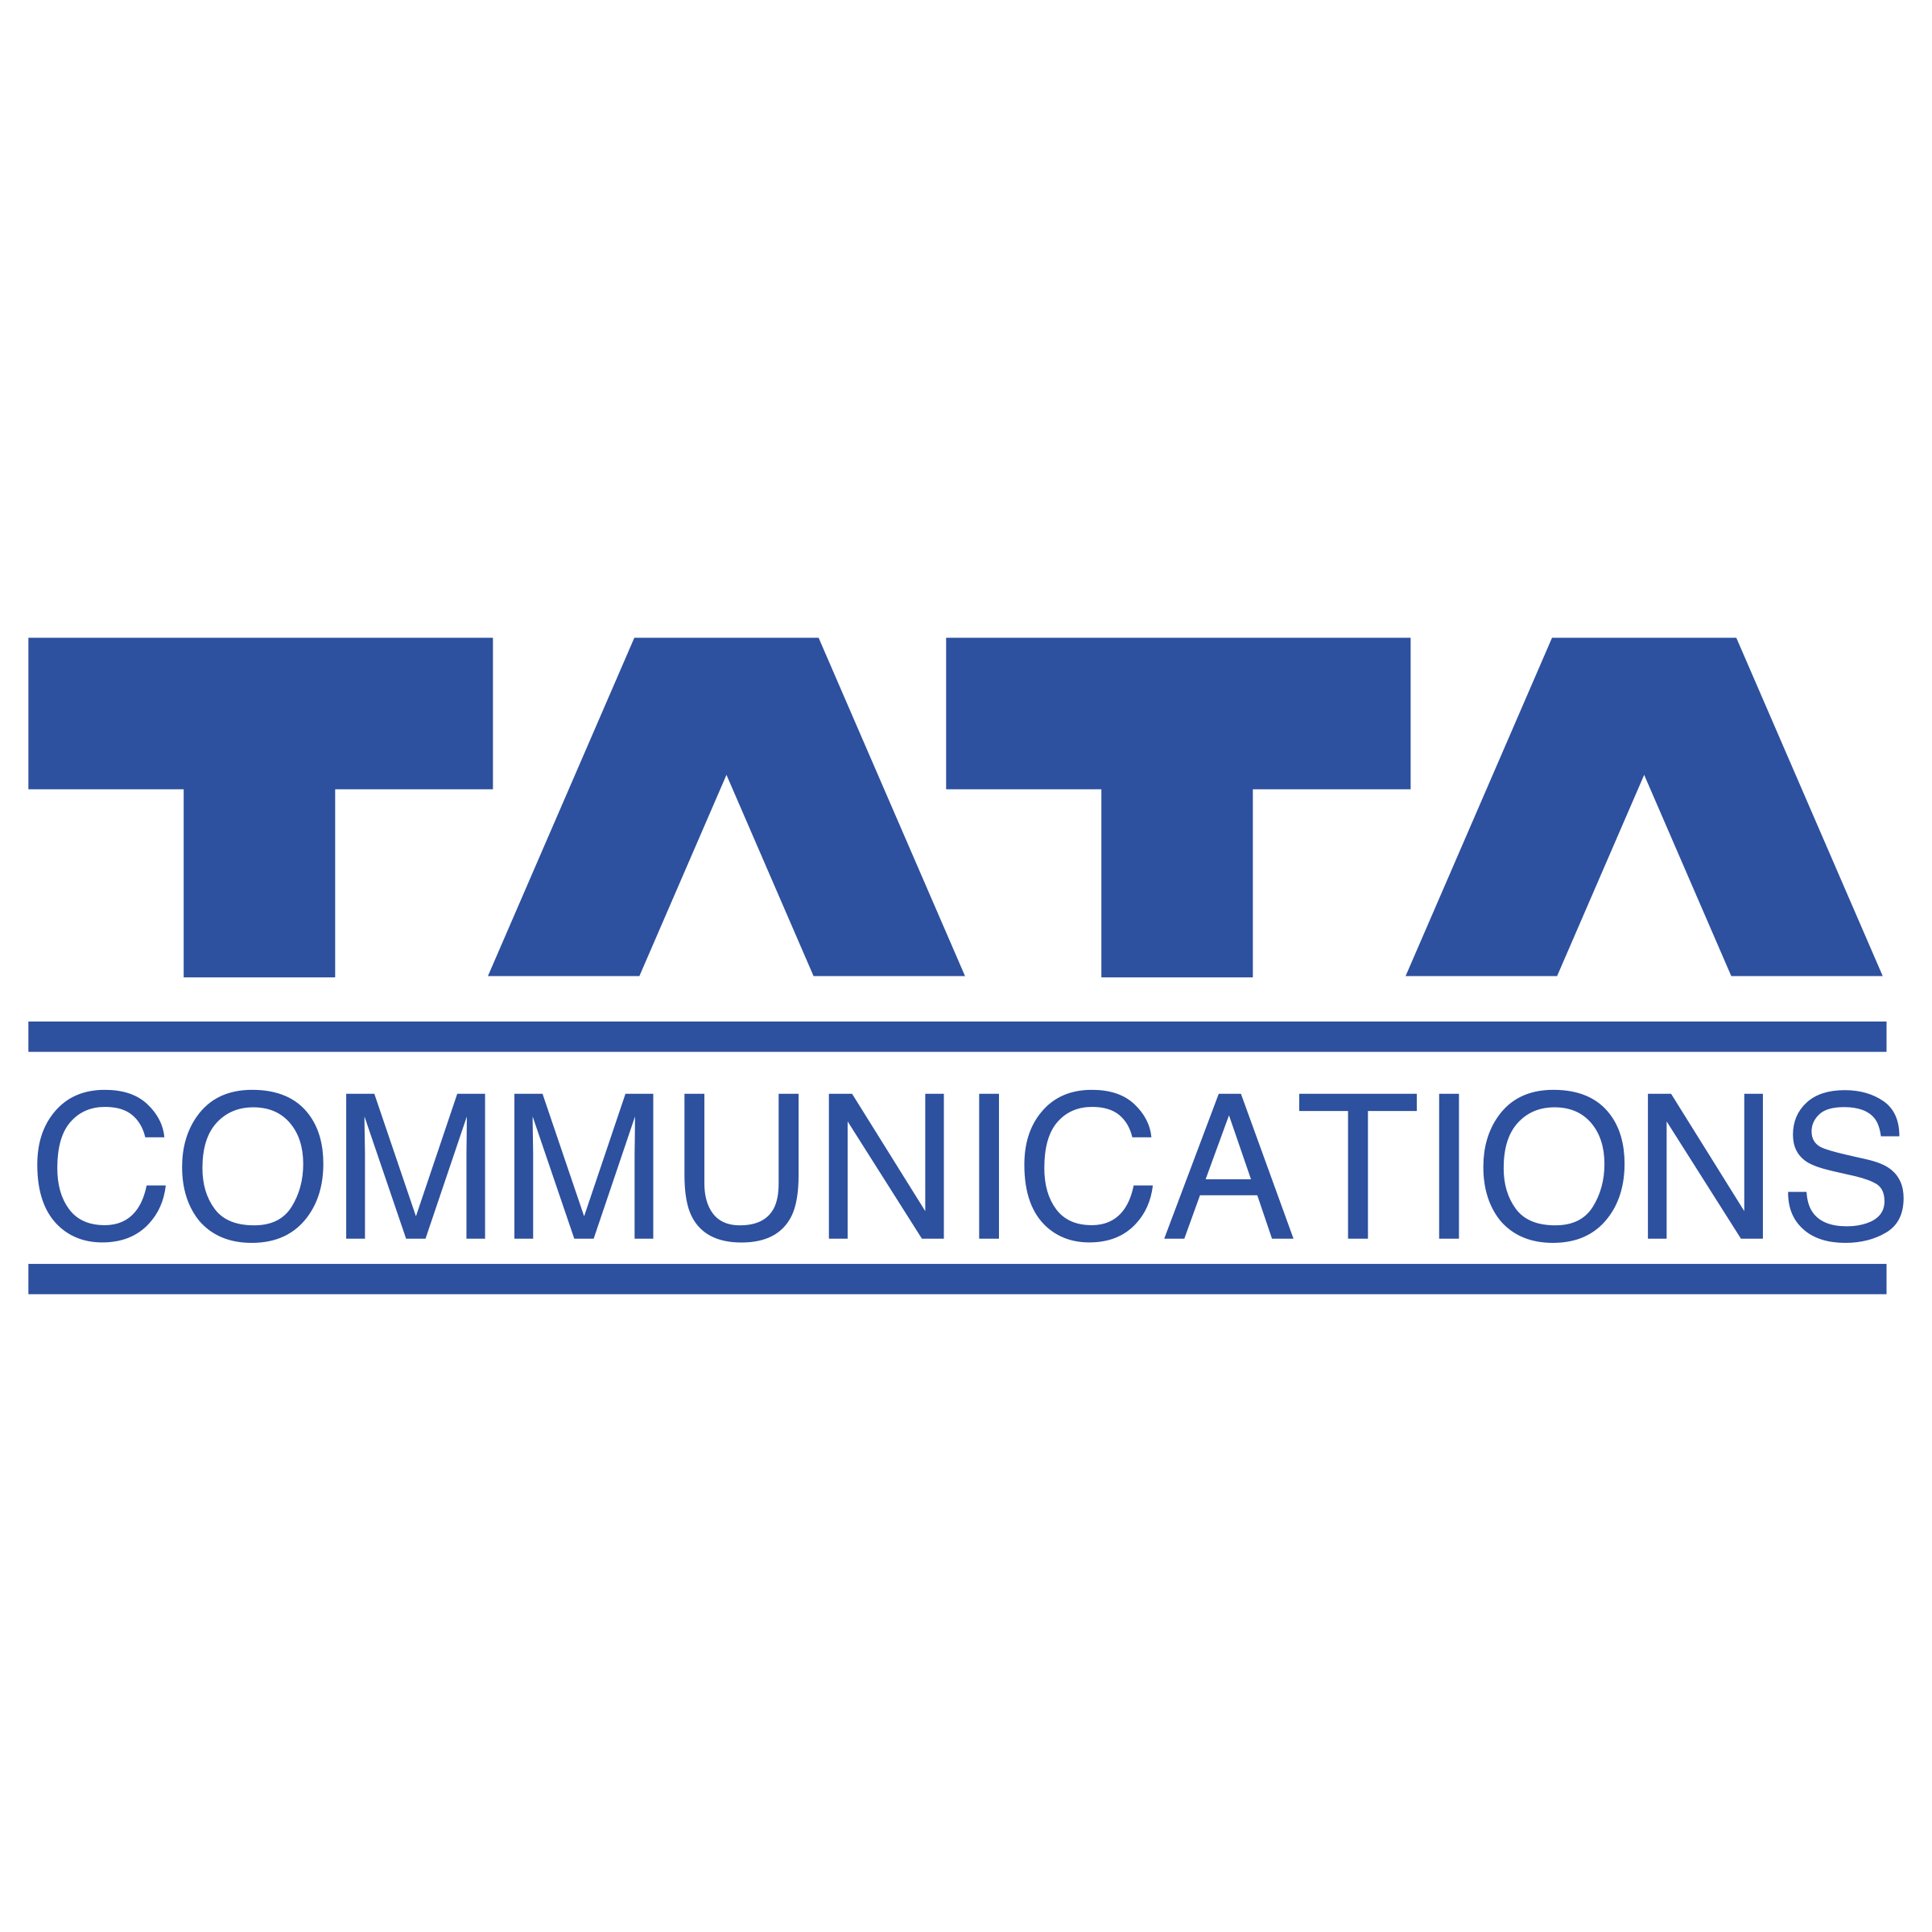 Tata Communications Logo - Tata Communications Logo PNG Transparent & SVG Vector